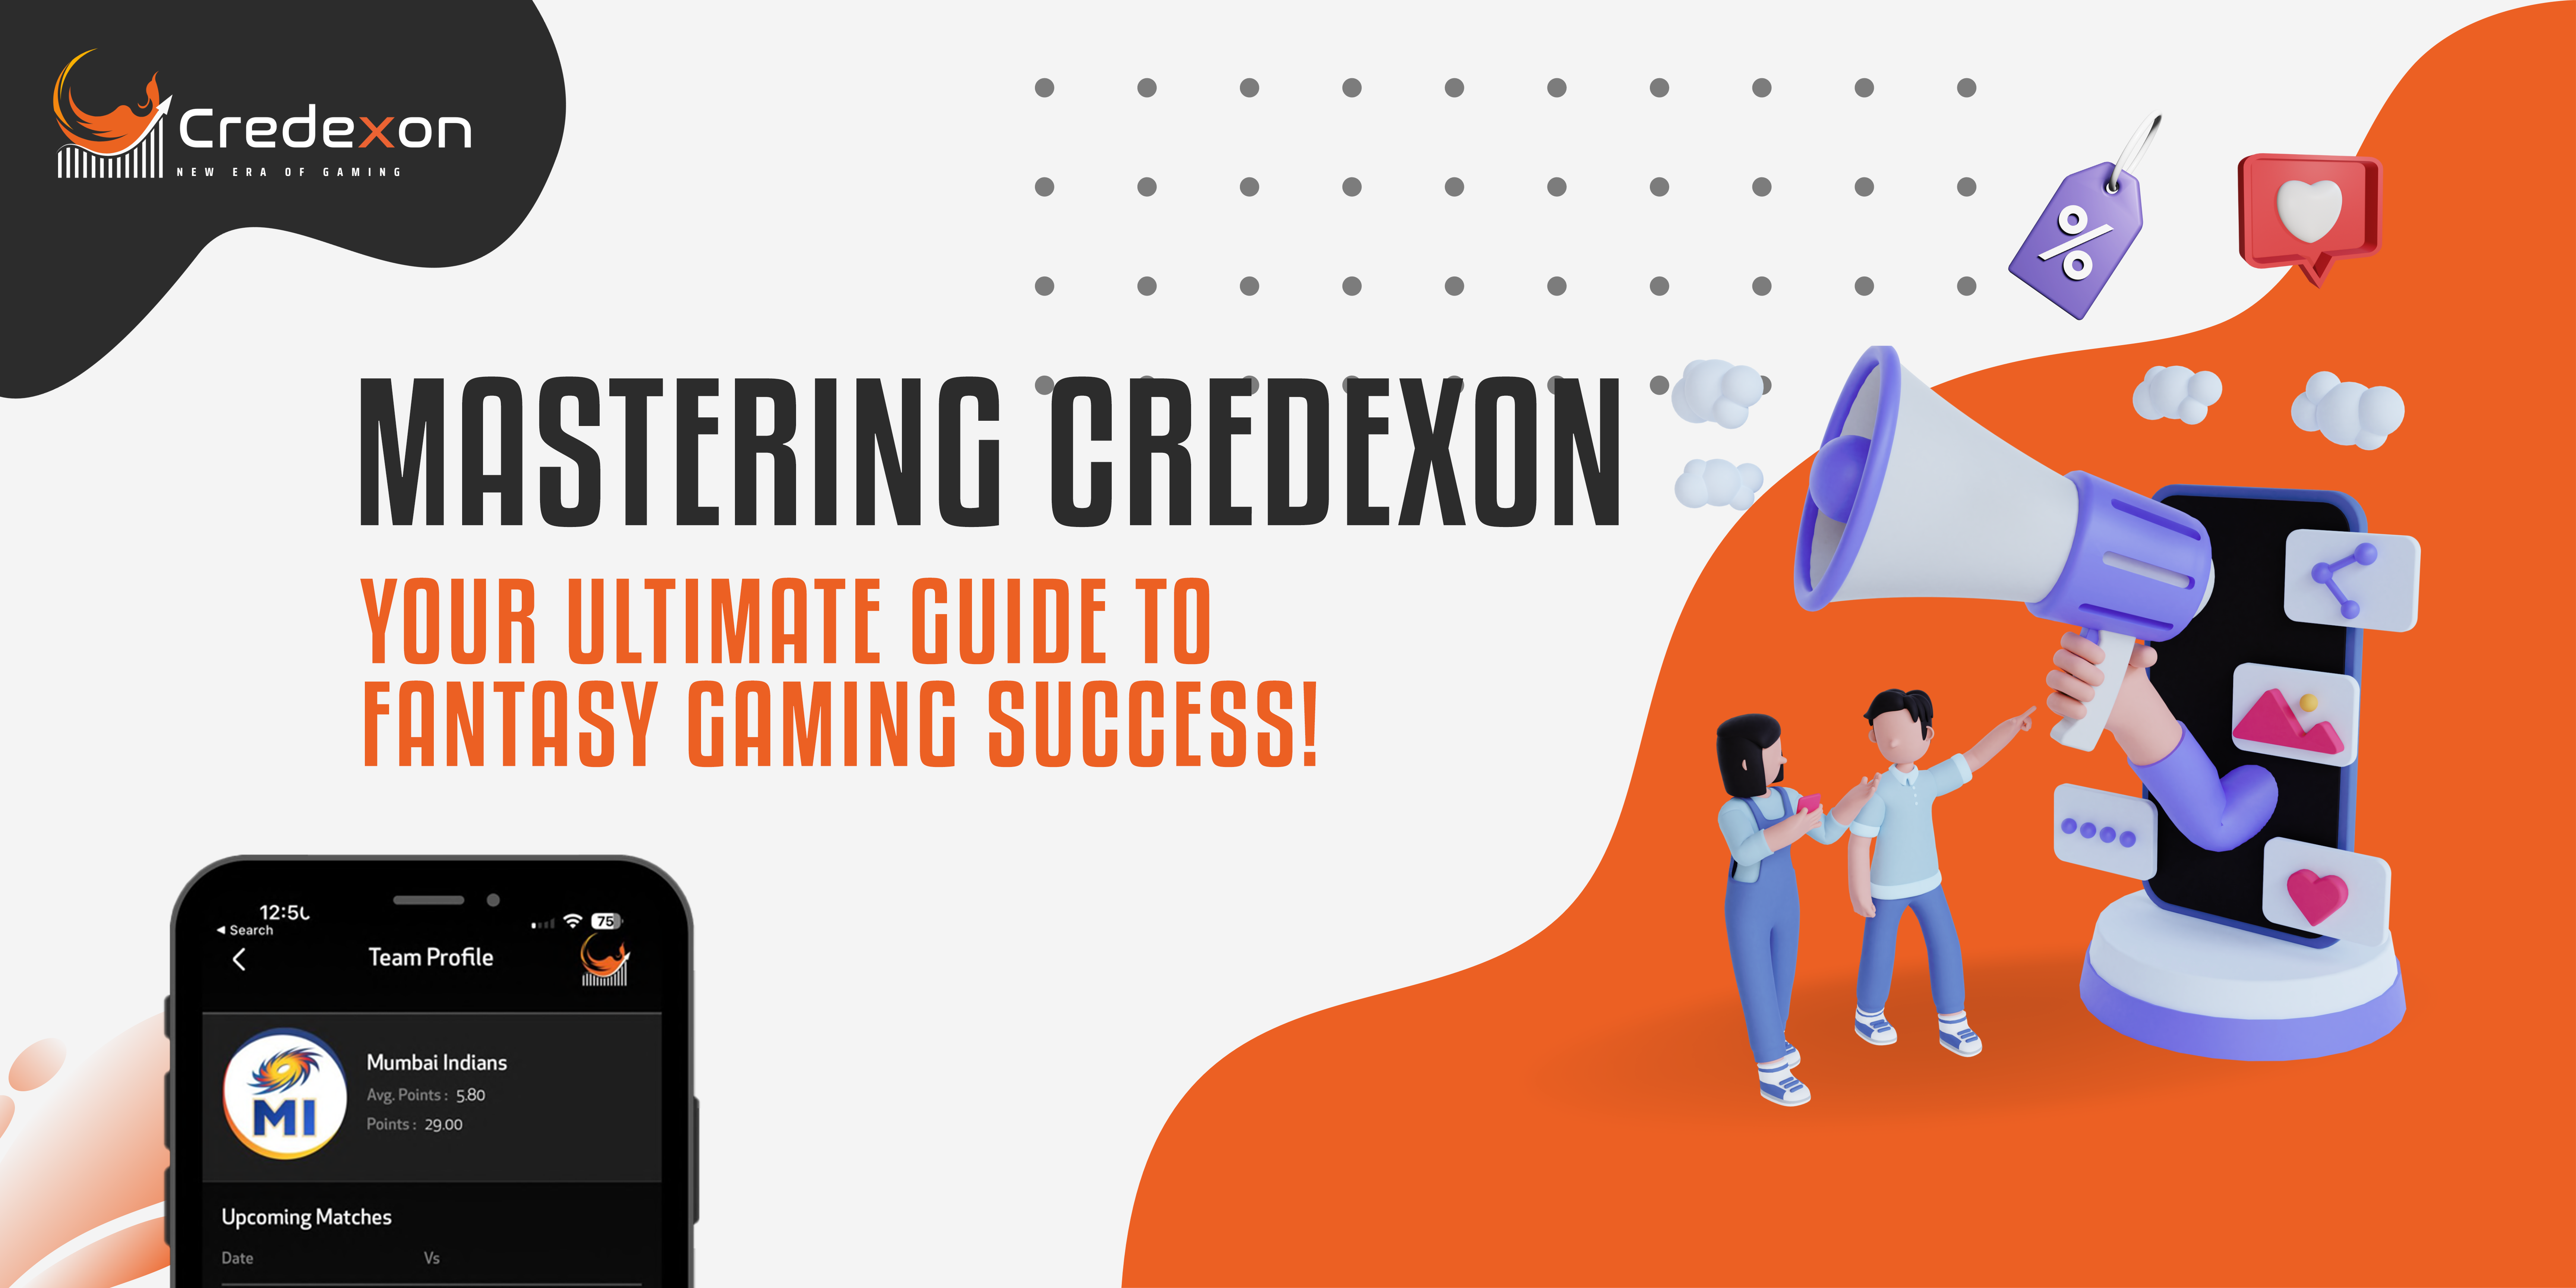 Ultimate Guide to Credexon Fantasy Gaming Success!